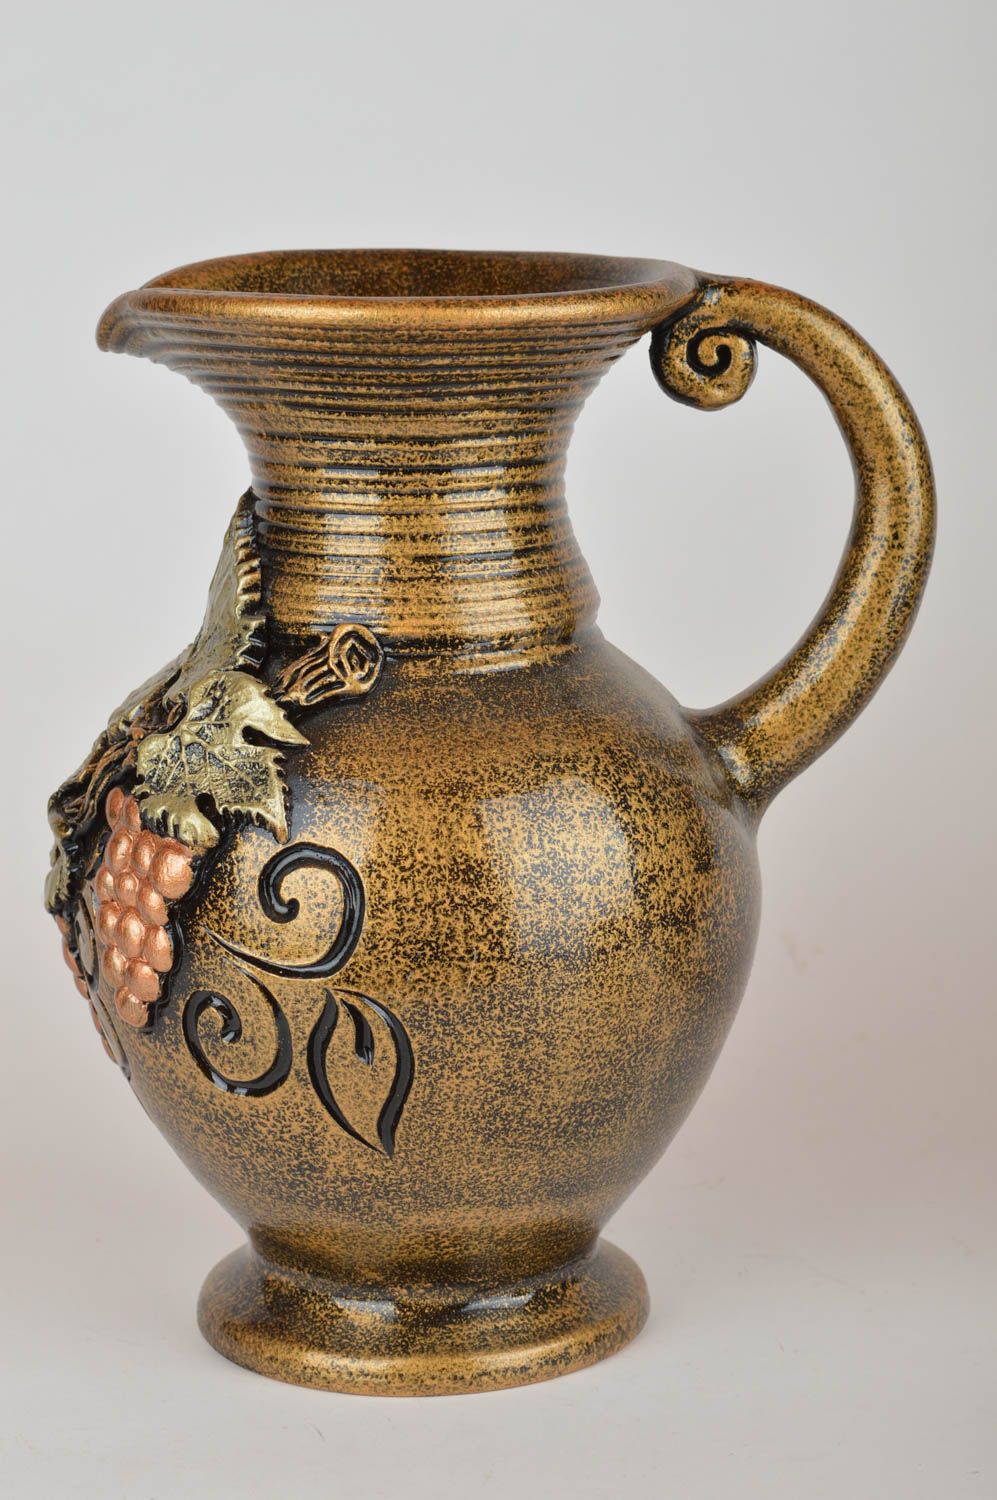 60 oz ceramic handmade wine pitcher with handle and molded grape design 2,9 lb photo 5